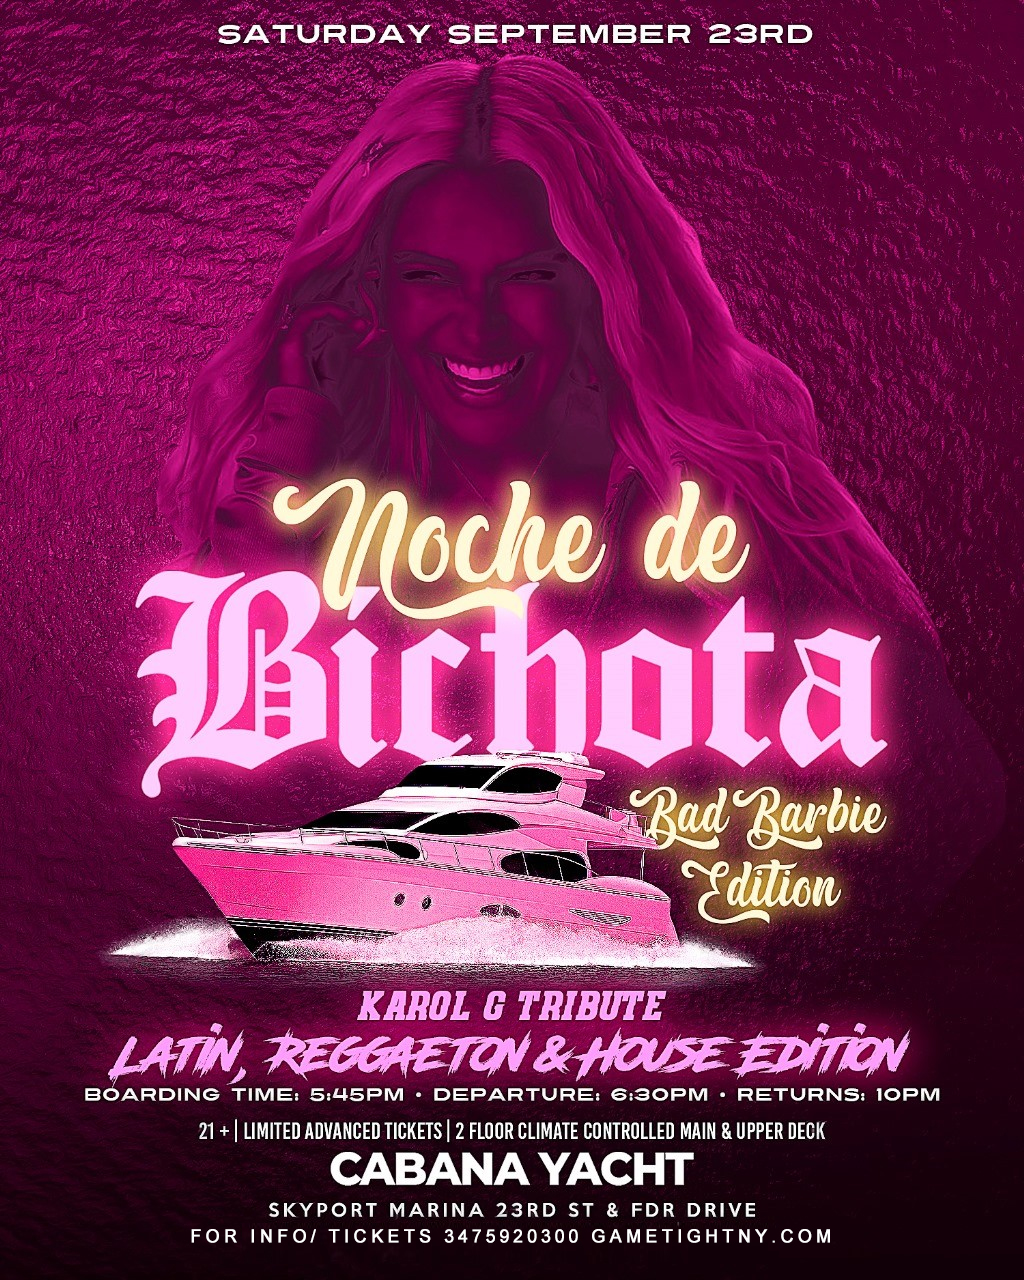 Noche de Bichota Karol G Theme Cabana Yacht Party Cruise